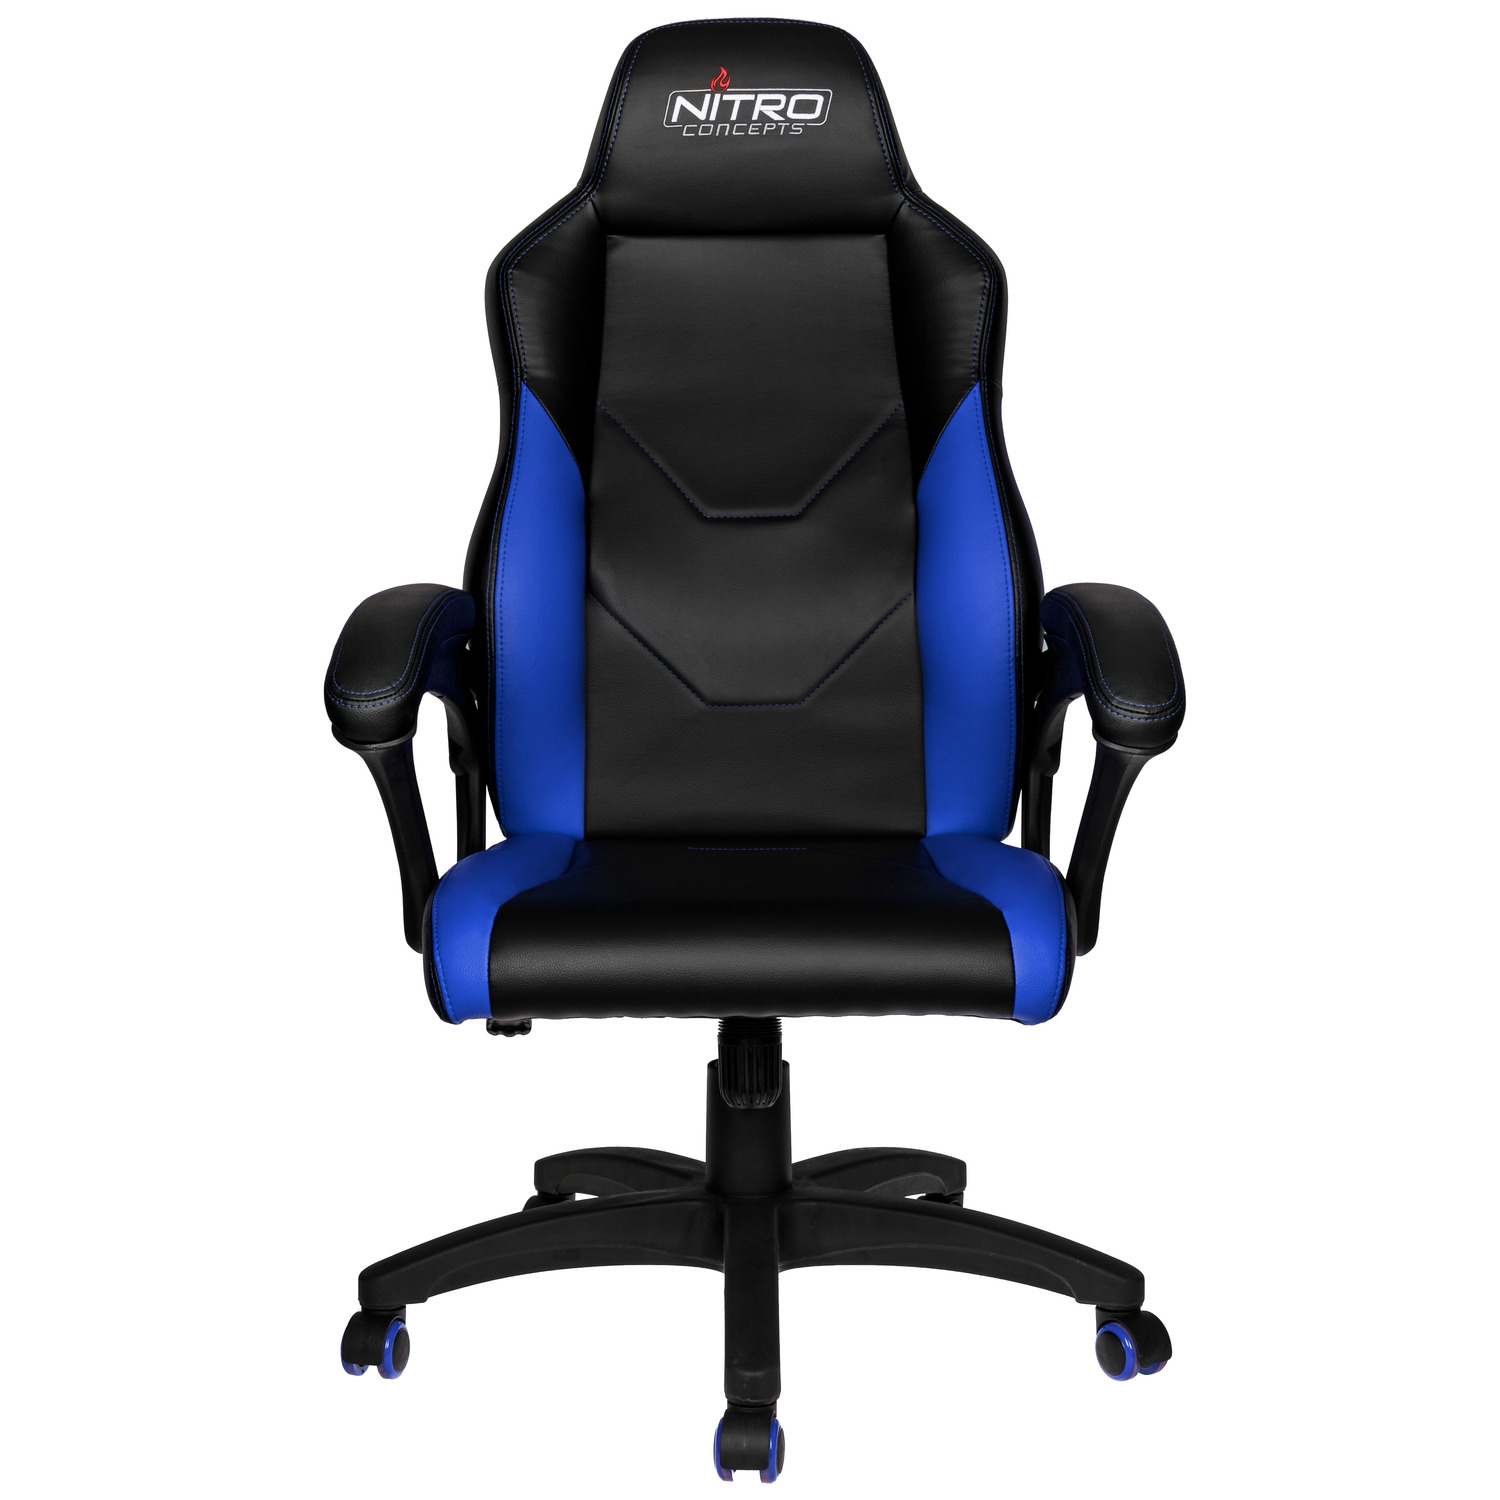 Nitro Concepts - C100 Gaming Chair - Black / Blue